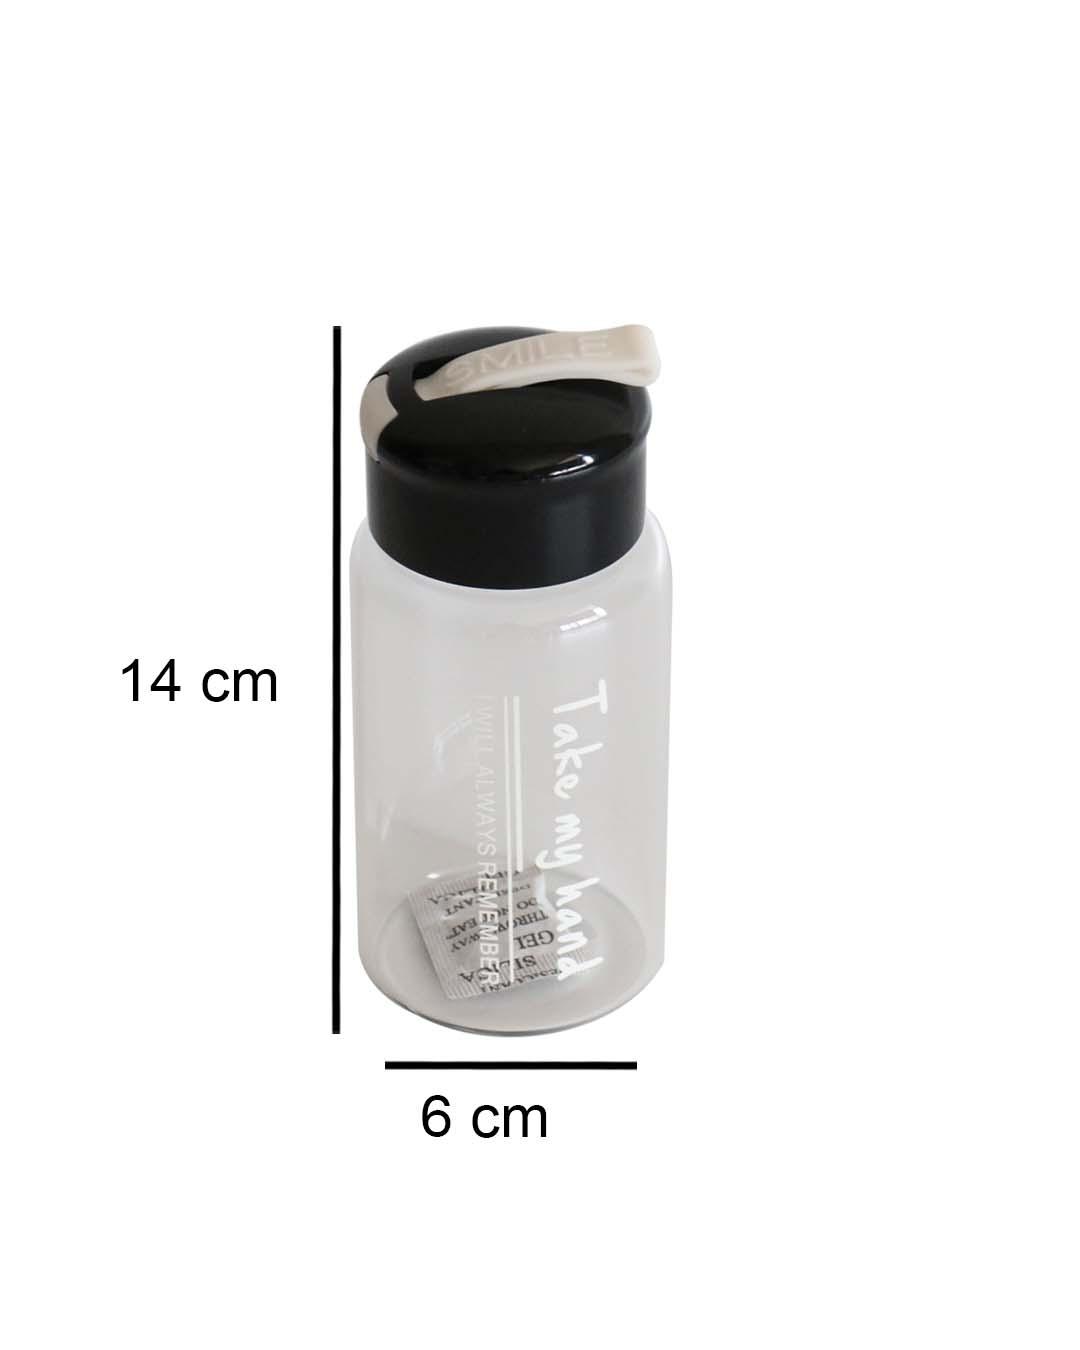 Water Bottle with Spout, Black, Glass, 320 mL - MARKET 99